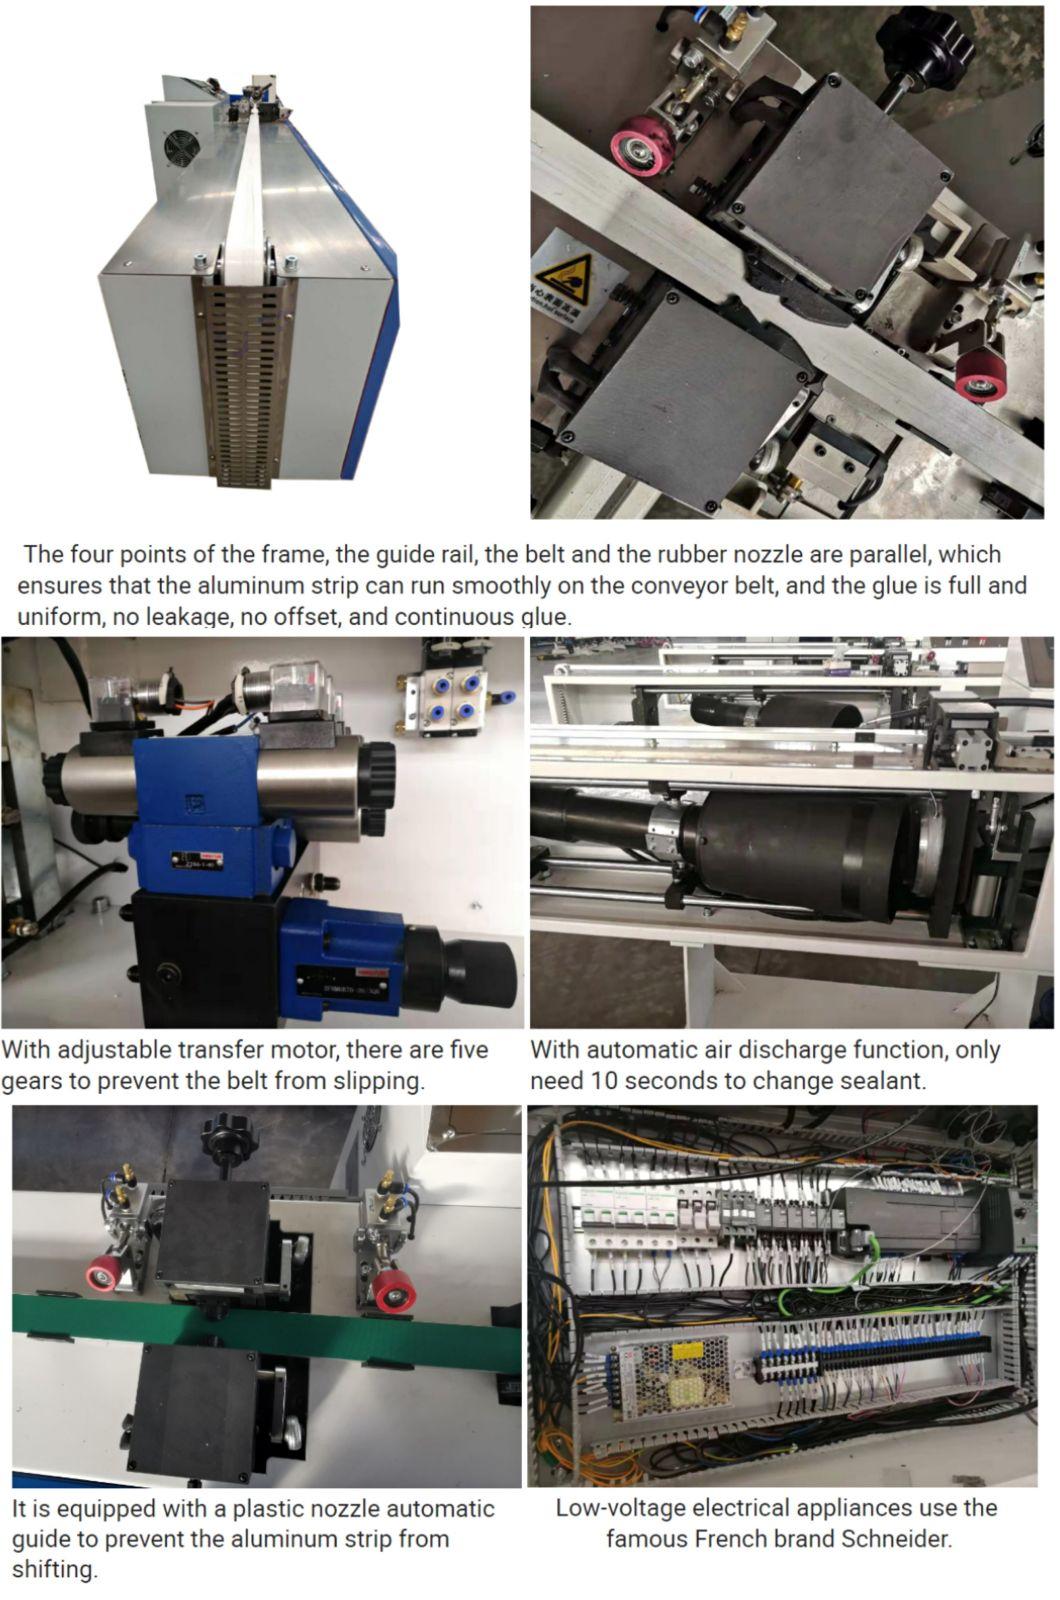 Top Quality Butyl Sealant Spreading Machine Easy Operation Butyl Coating Machine